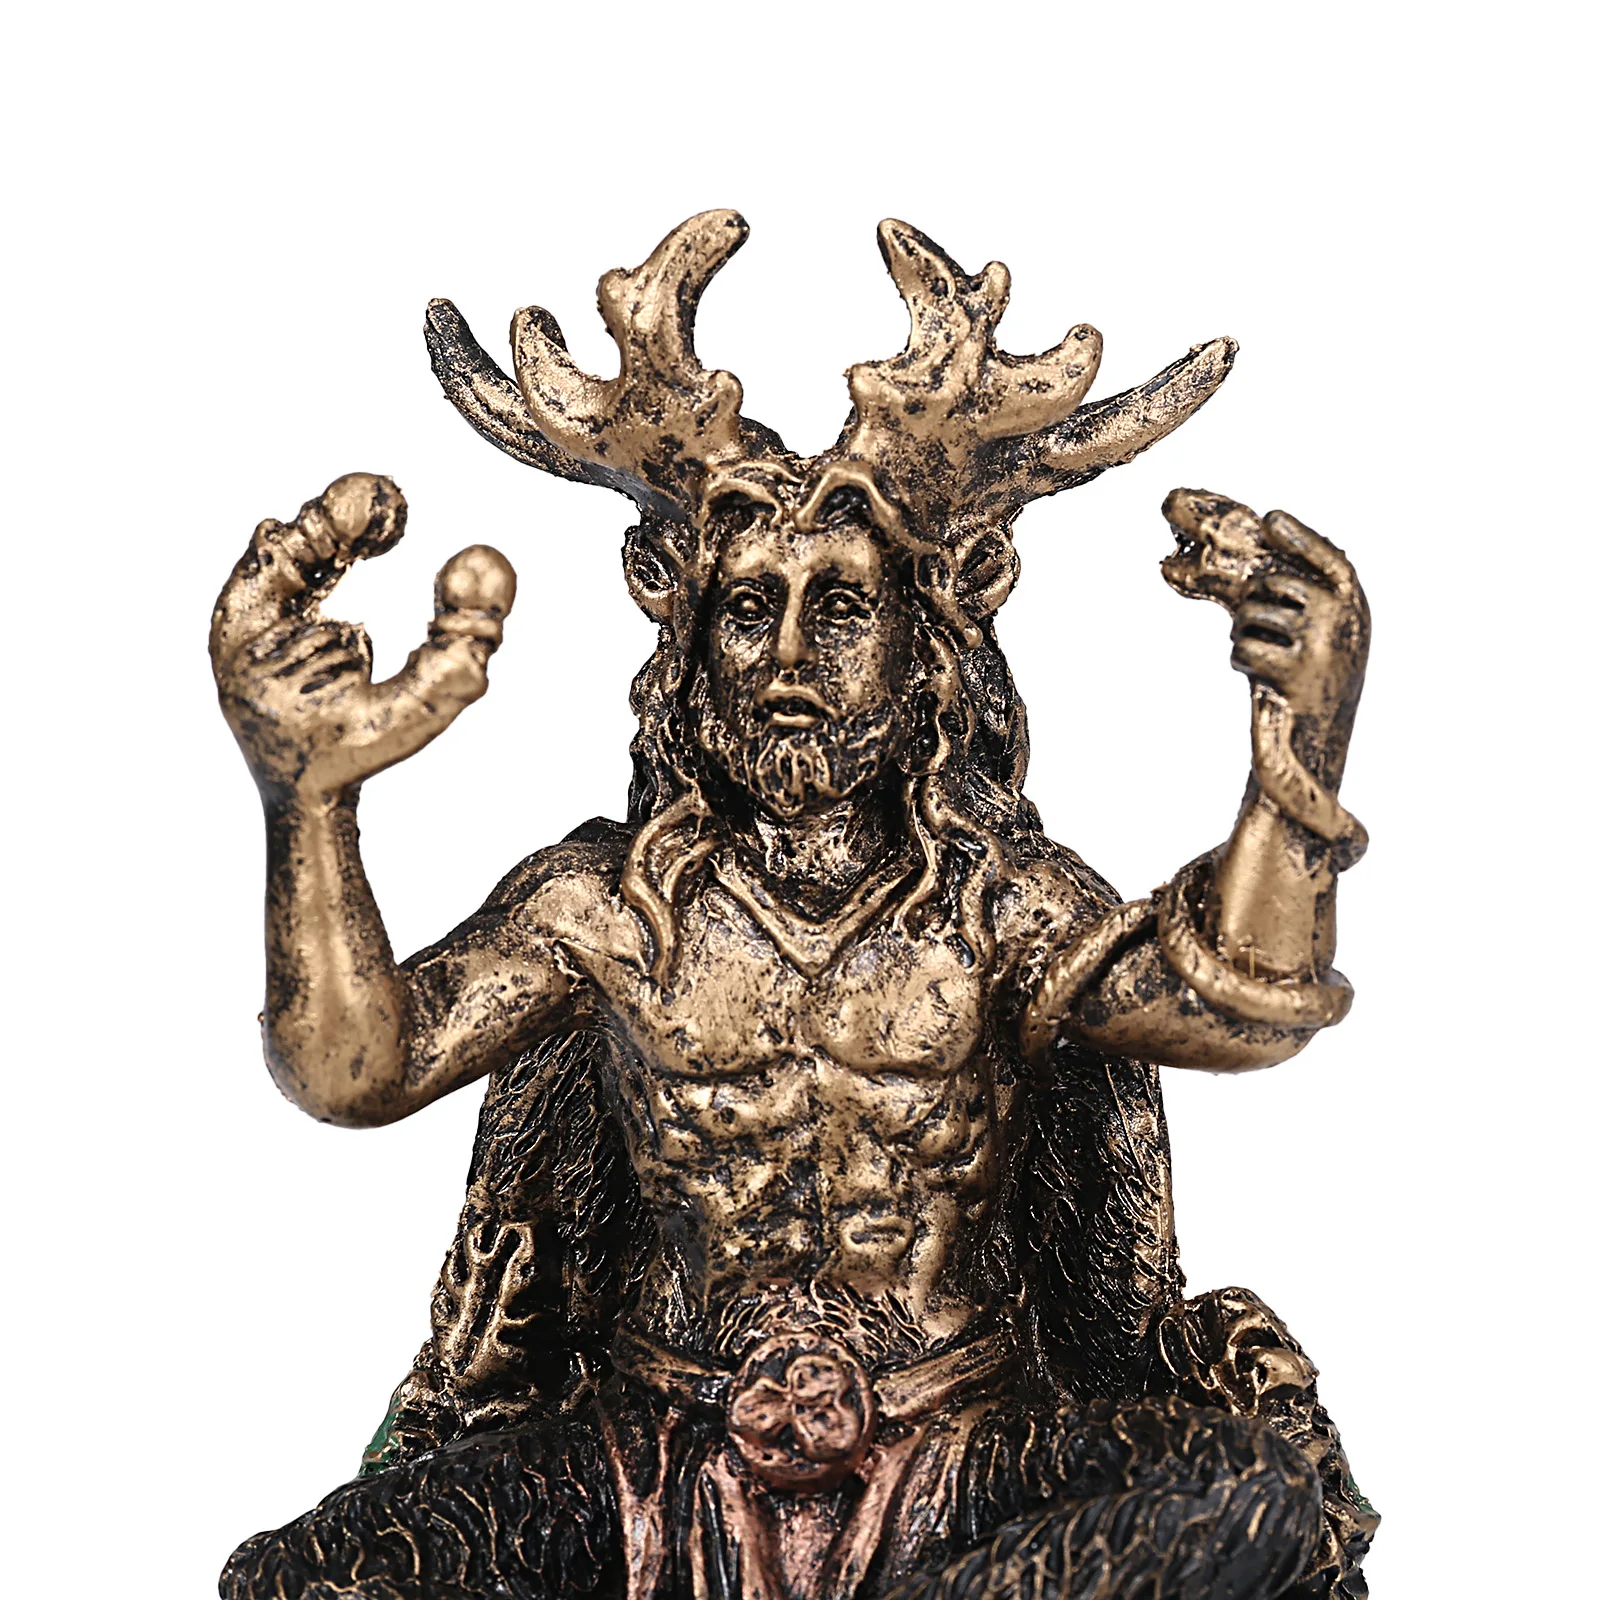 

Newly 5 Inch Cernunnos Celtics Horned God of Animals Resin Statue The Underworld Statue for Home Garden Decoration 19ing